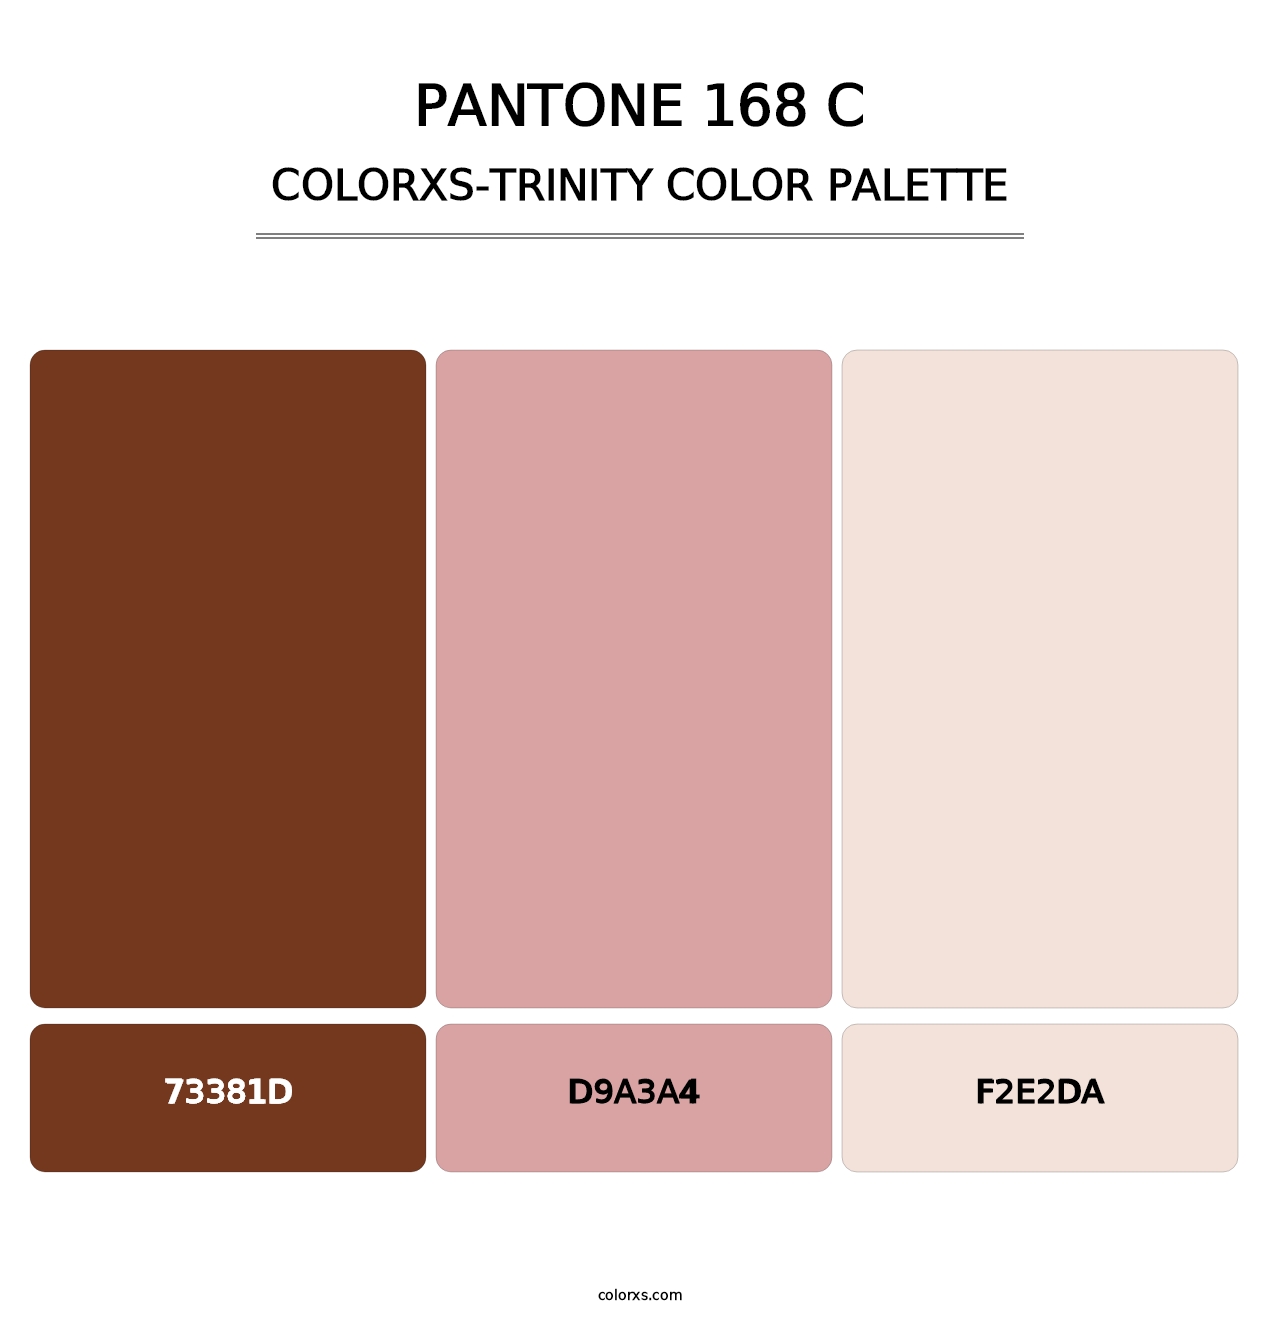 PANTONE 168 C - Colorxs Trinity Palette